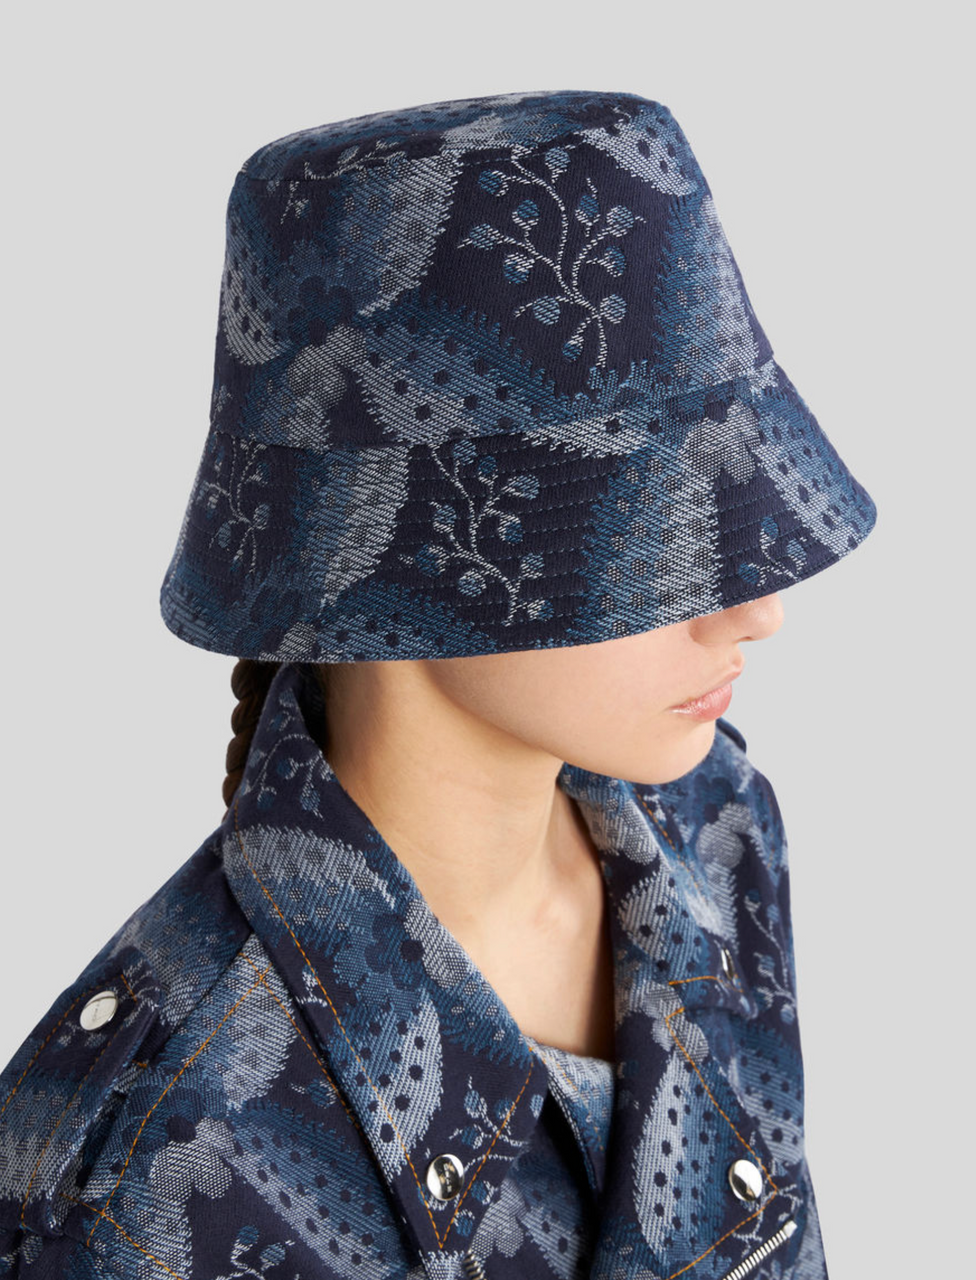 Etro Denim Jacquard Bucket Hat in Navy Blue, Size Small